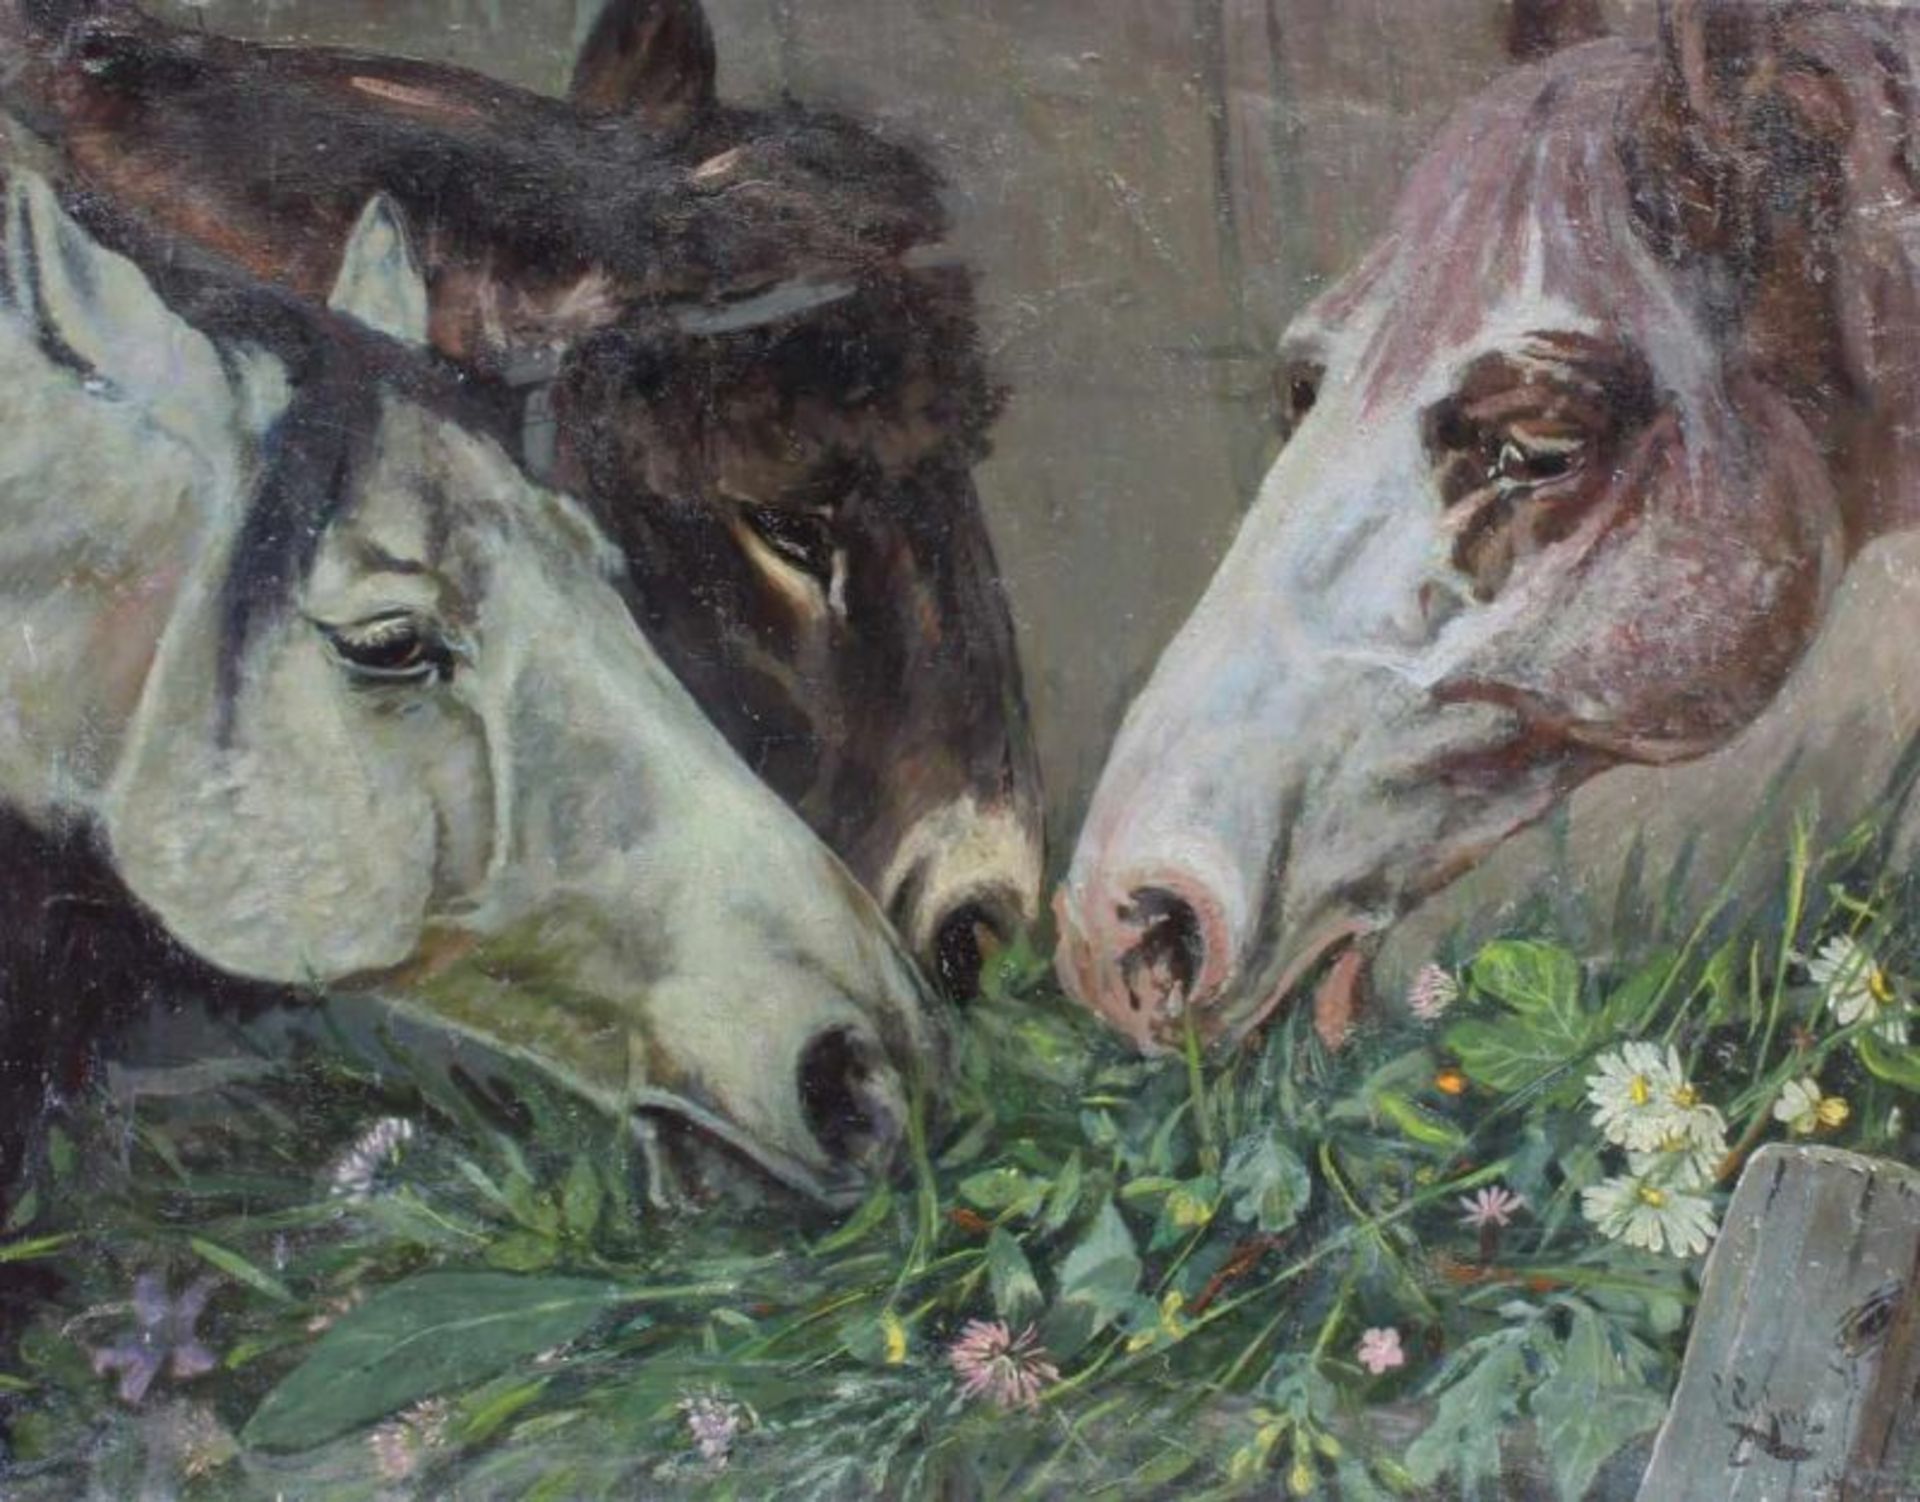 Gheri, Leopold (1866 Innsbruck - 1952, Maler und Reiseschriftsteller), "Pferde an der Krippe", Öl